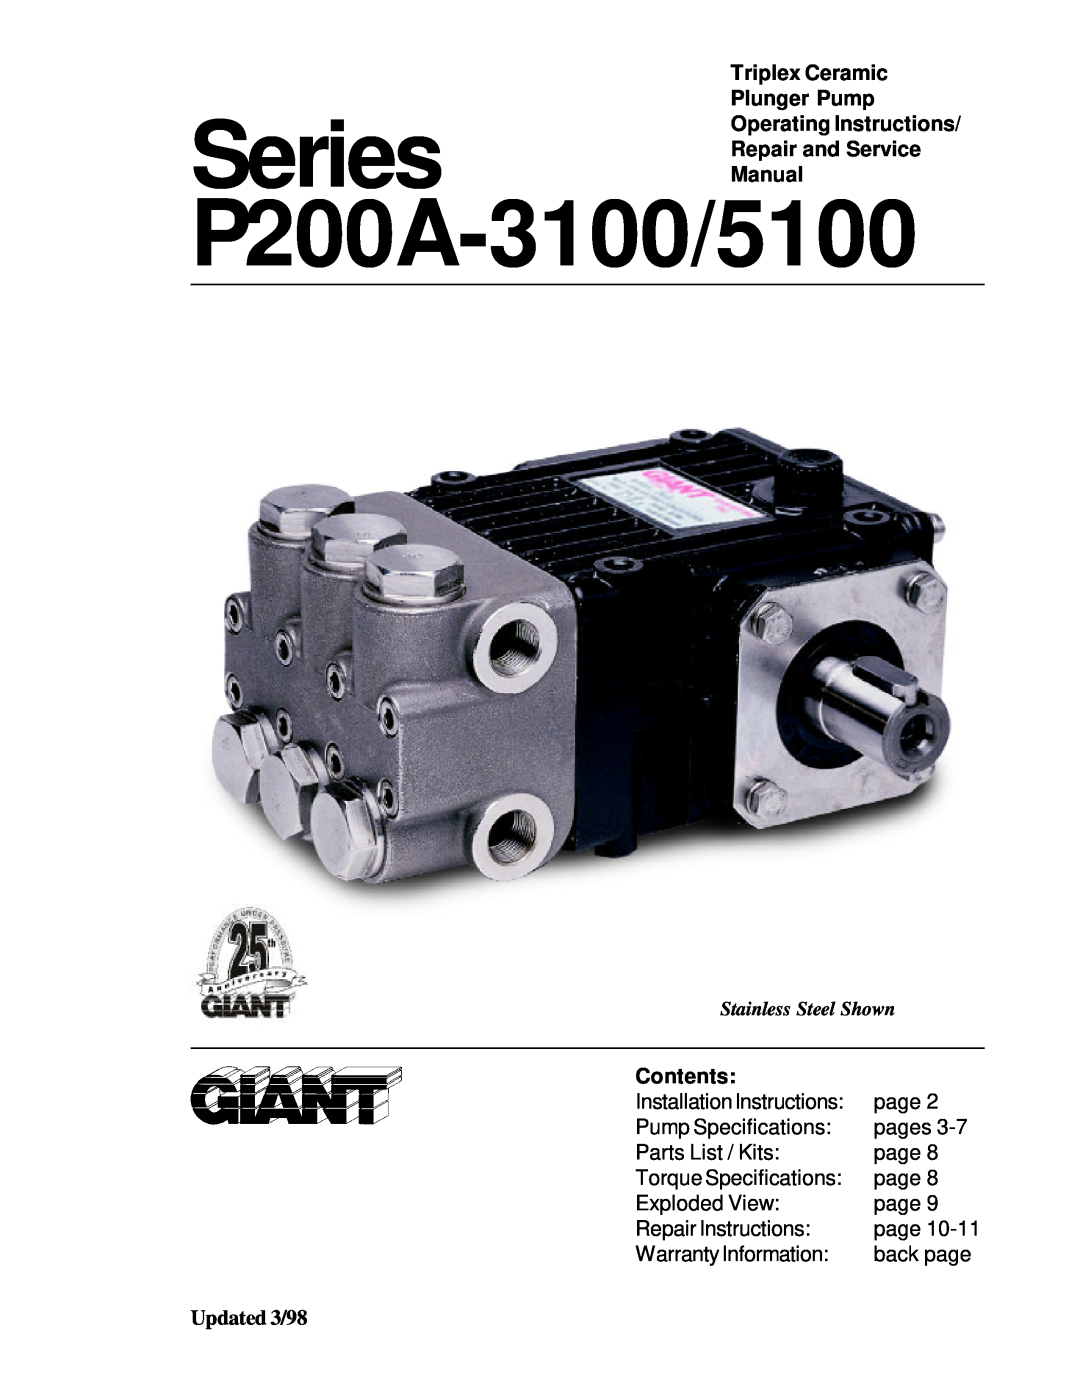 Giant Tripex Ceramic Plunger Pump installation instructions P200A-3100/5100, Triplex Ceramic Plunger Pump, Manual 